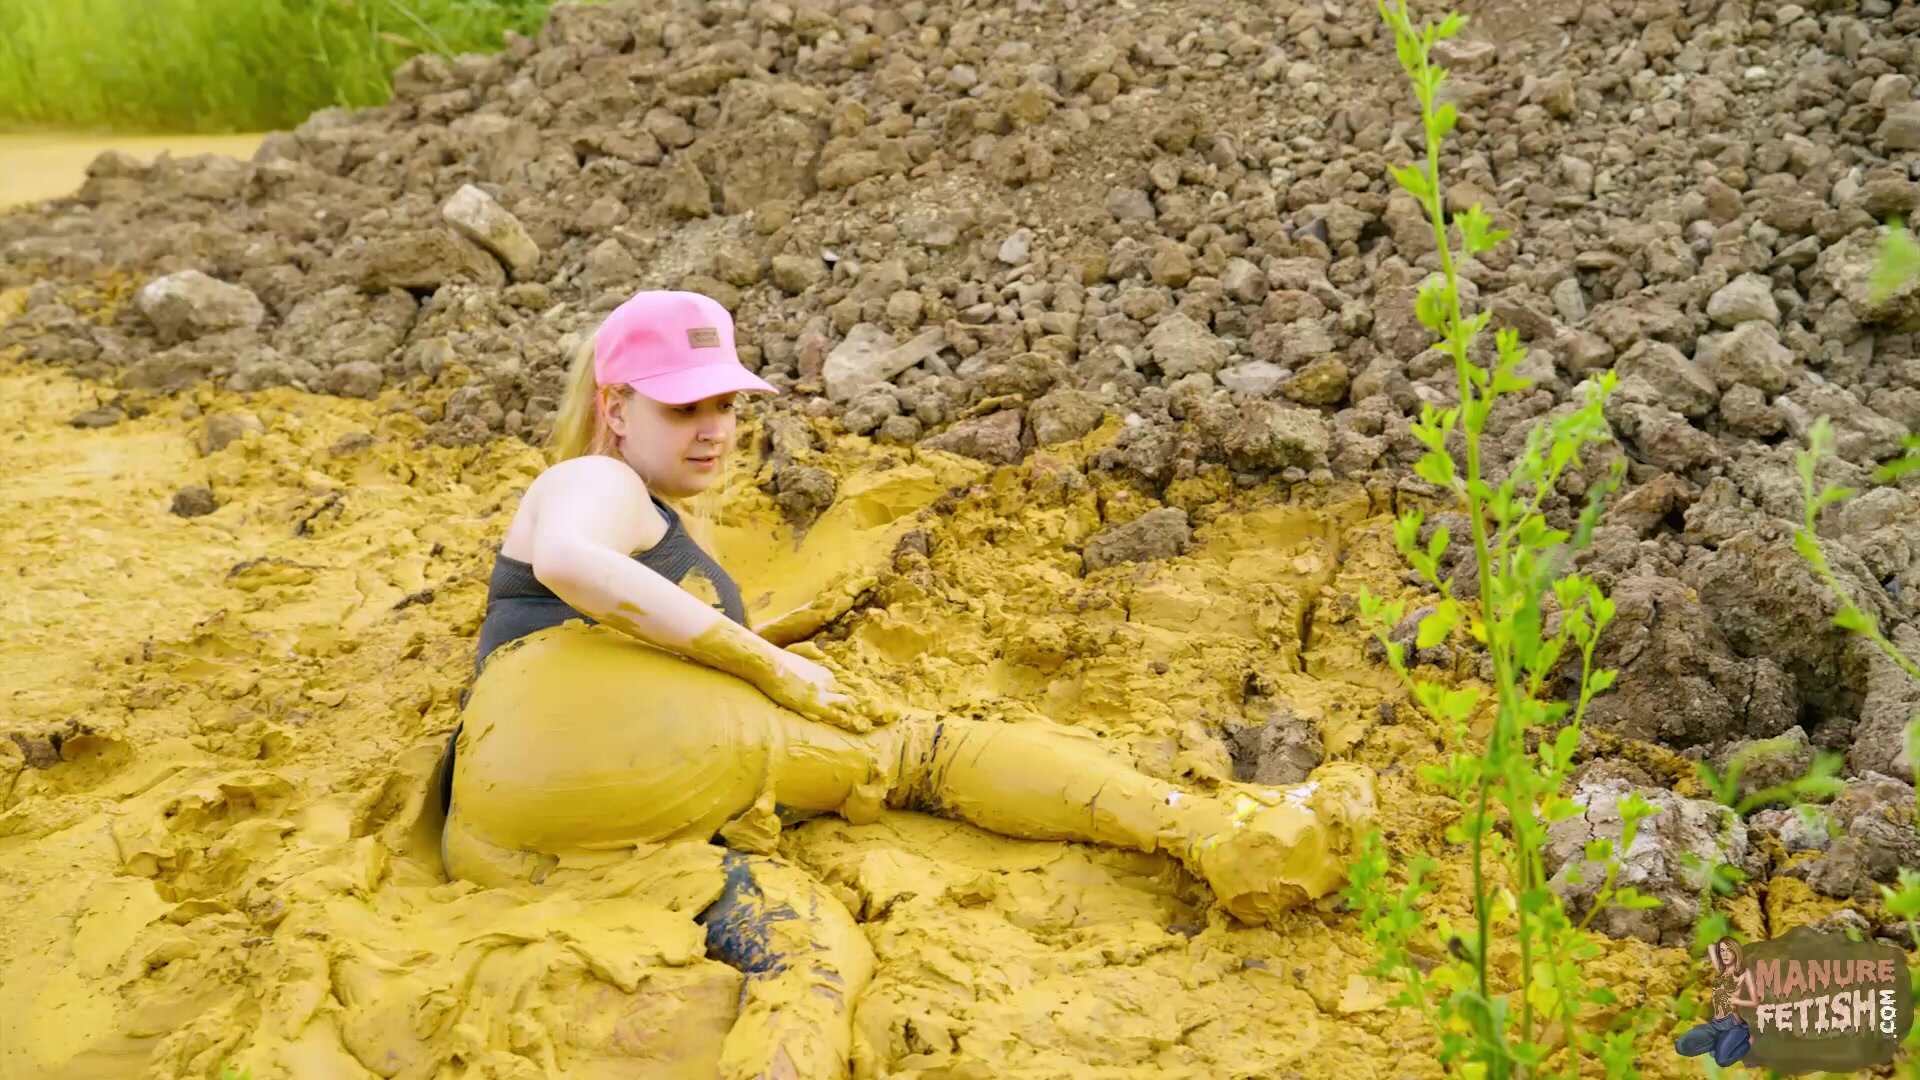 Orgasm in mud and manure